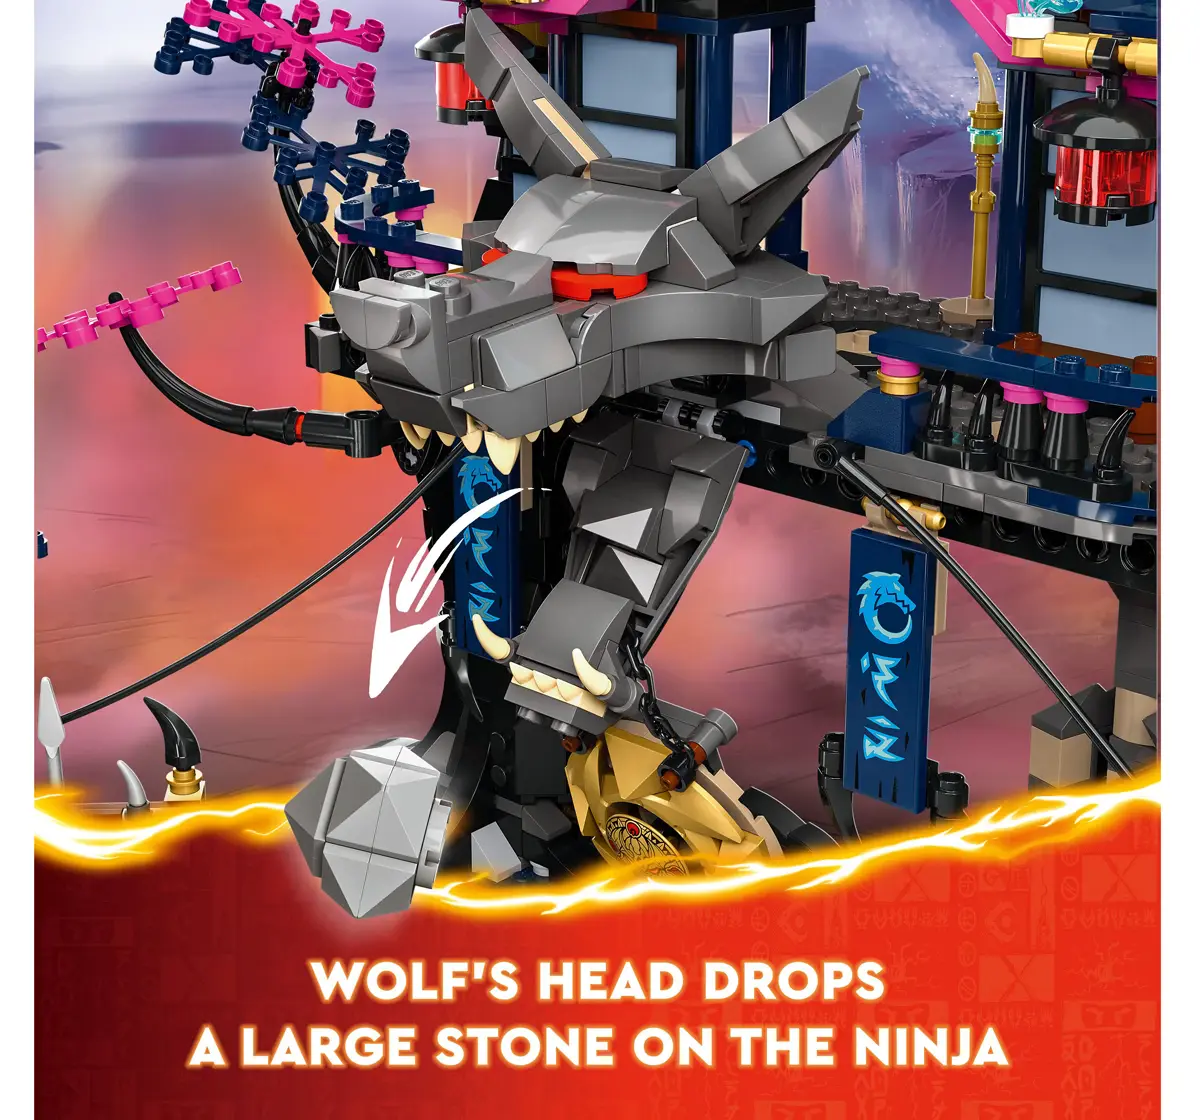 LEGO NINJAGO Wolf Mask Shadow Dojo Toy Set 71813 (1190 Pieces)